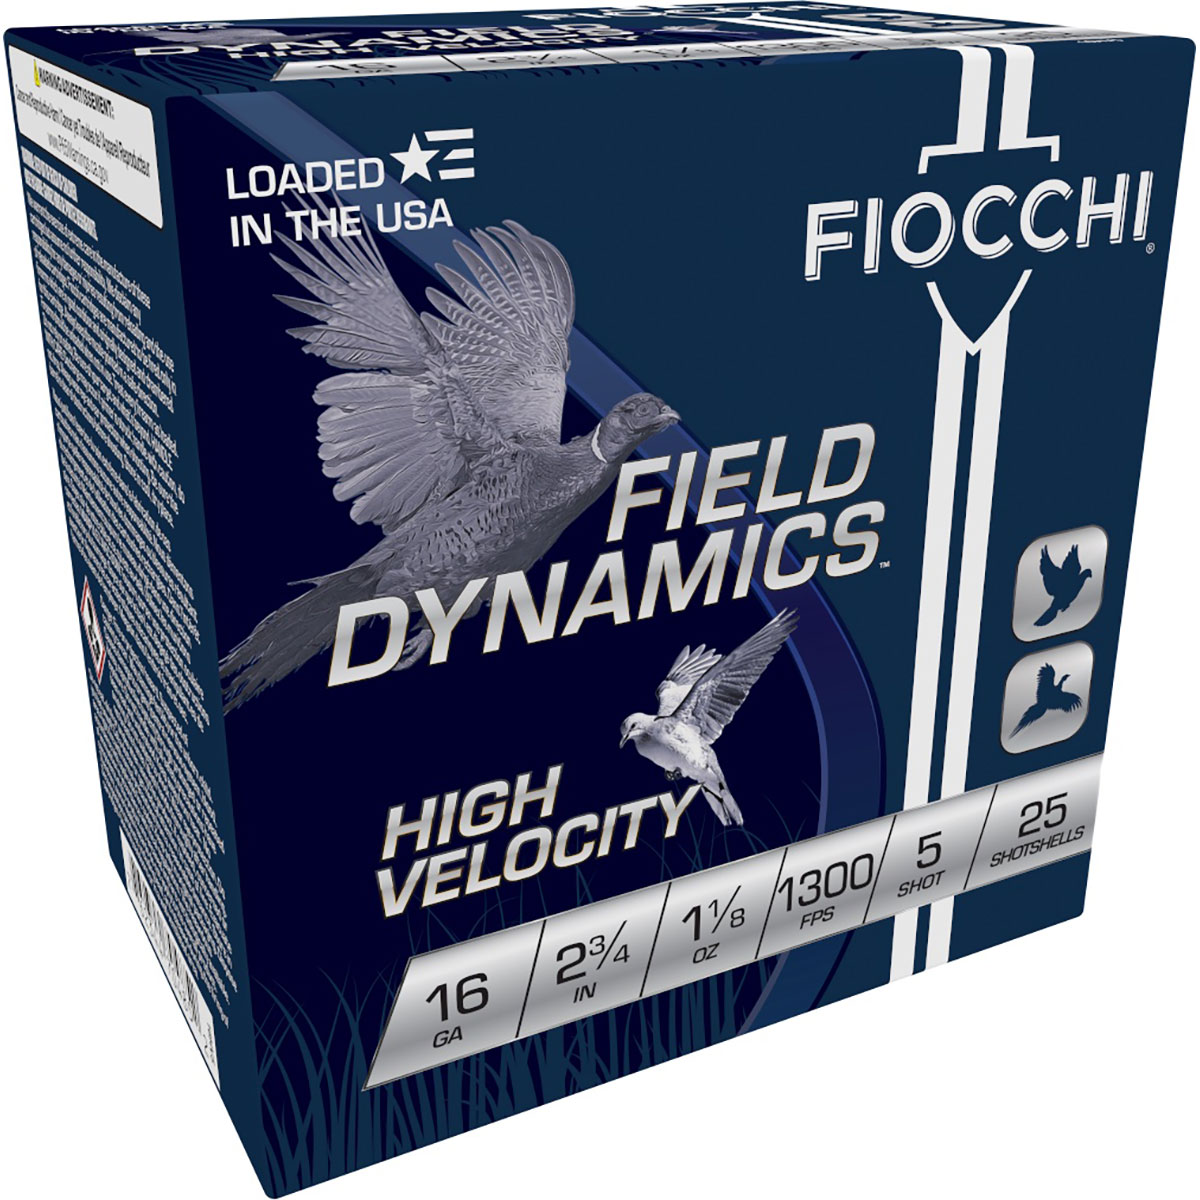 FIOCCHI AMMUNITION - Fiocchi High Velocity Ammo 16ga 2-3/4" 1-1/8oz #5 Shot 25/bx